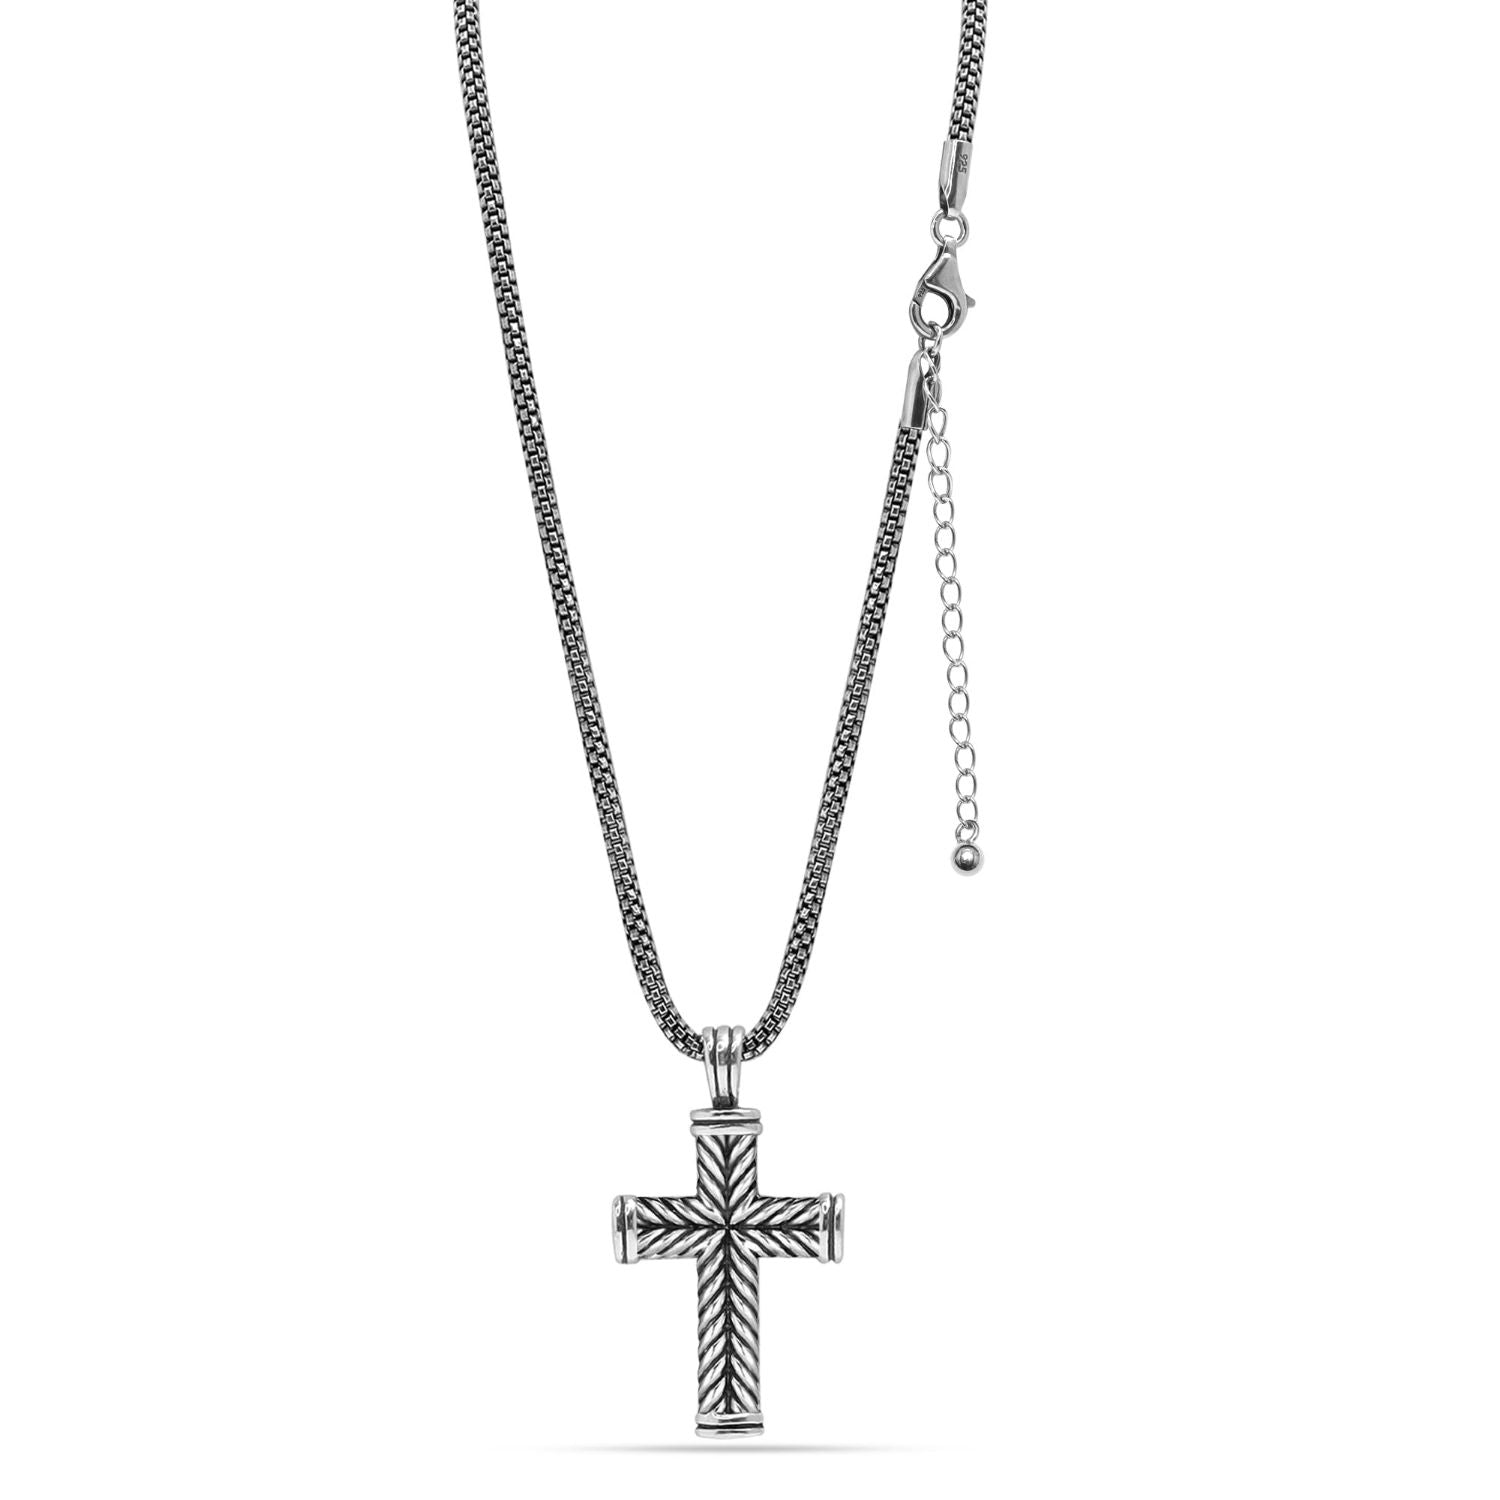 925 Sterling Silver Antique  Chevron Cross Pendant Popcorn Chain Necklace for Men Boys